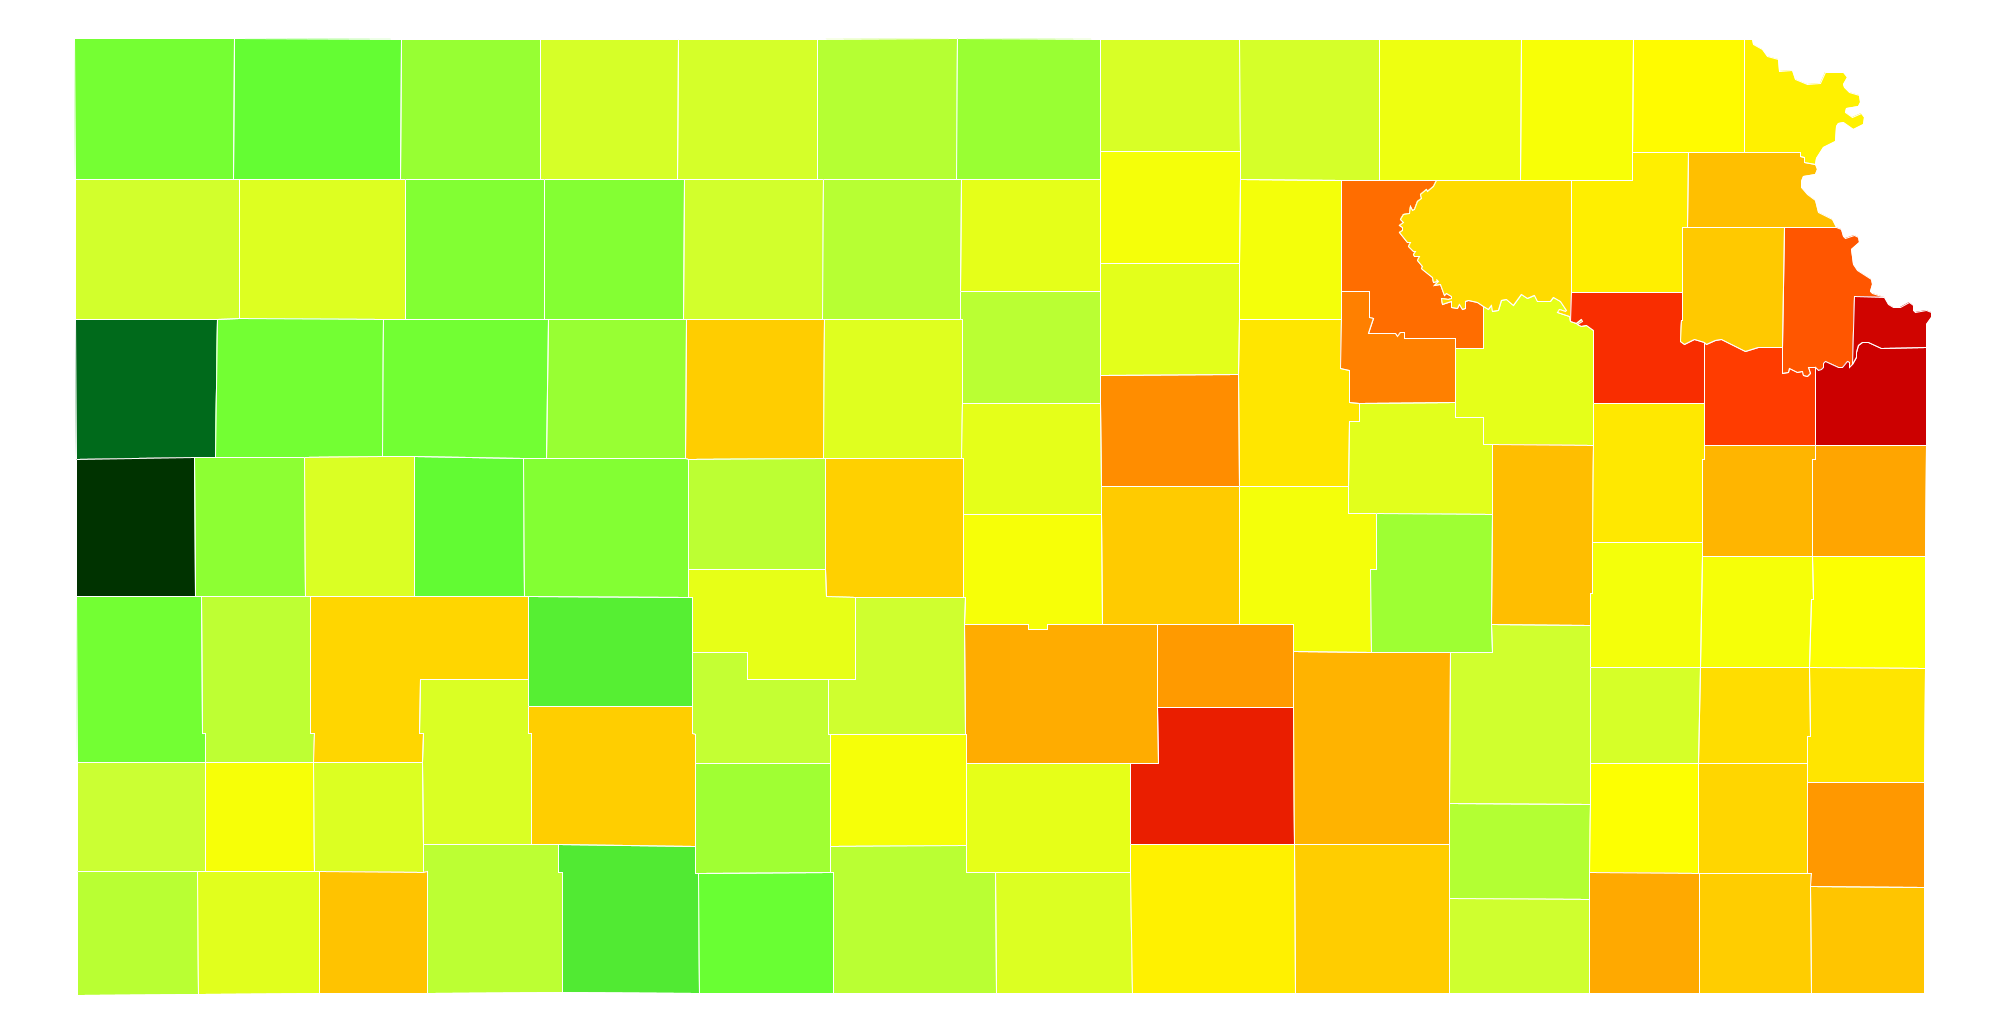 Kansas Population Density